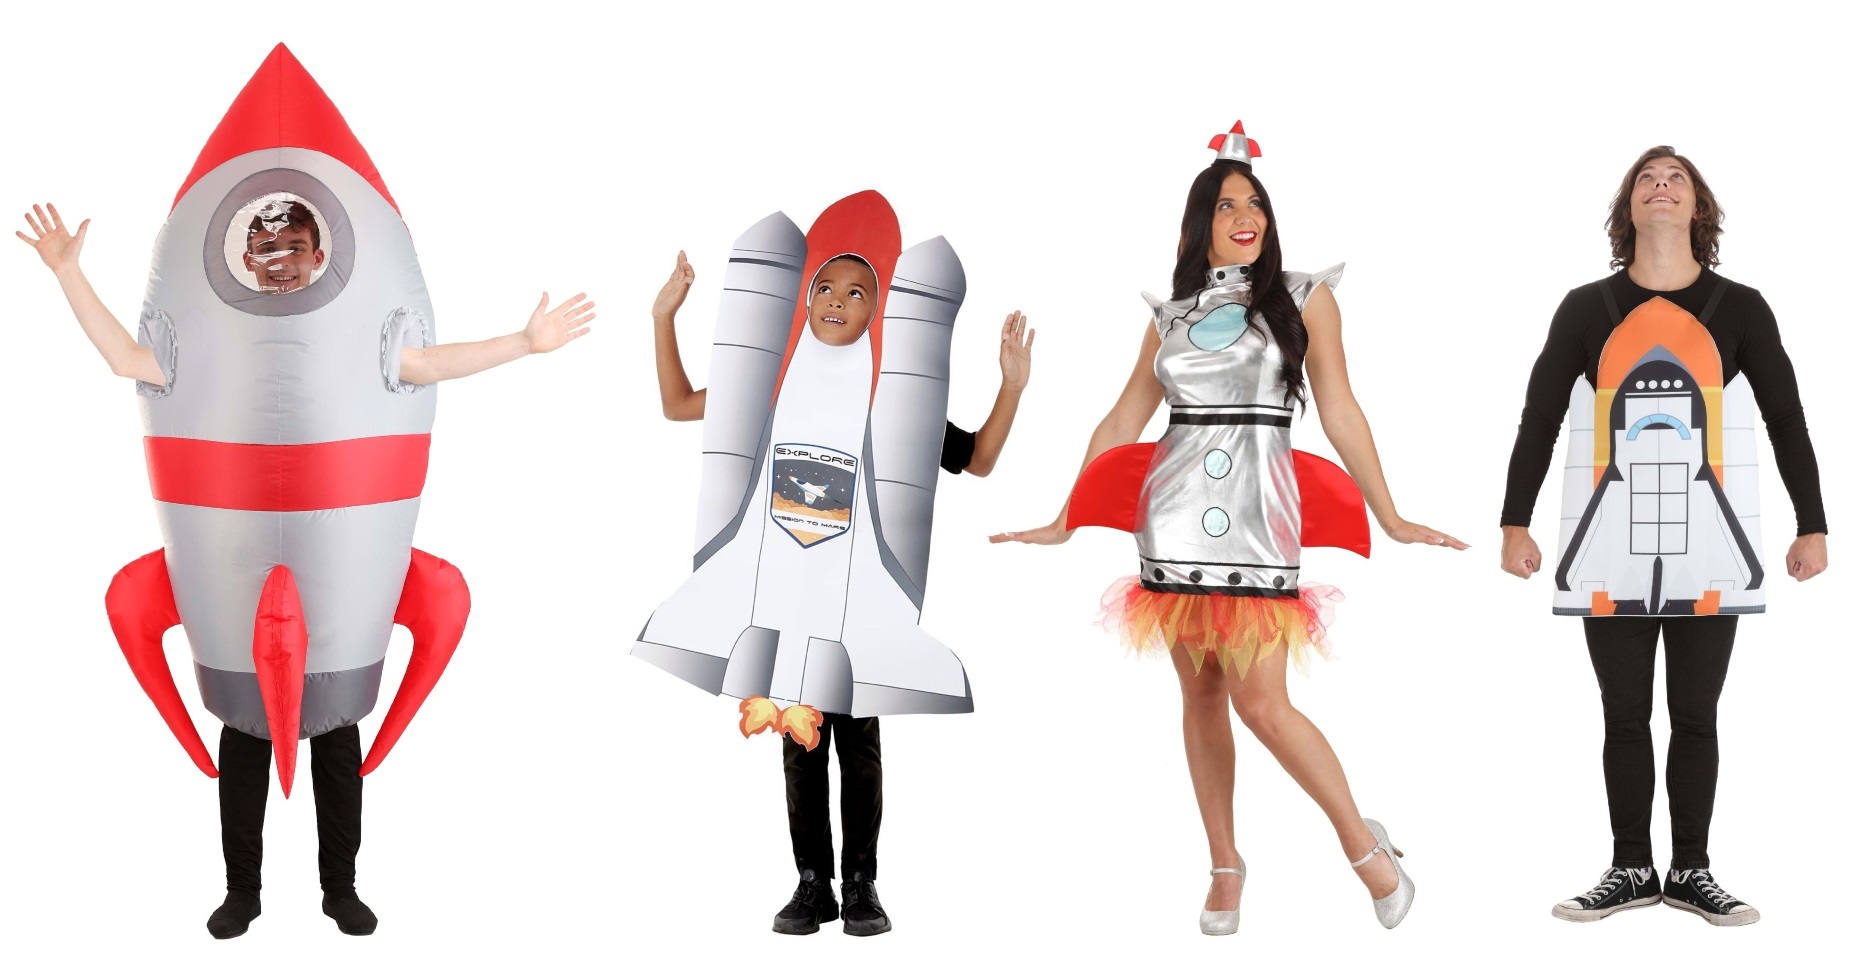 Rocket Ship Costumes